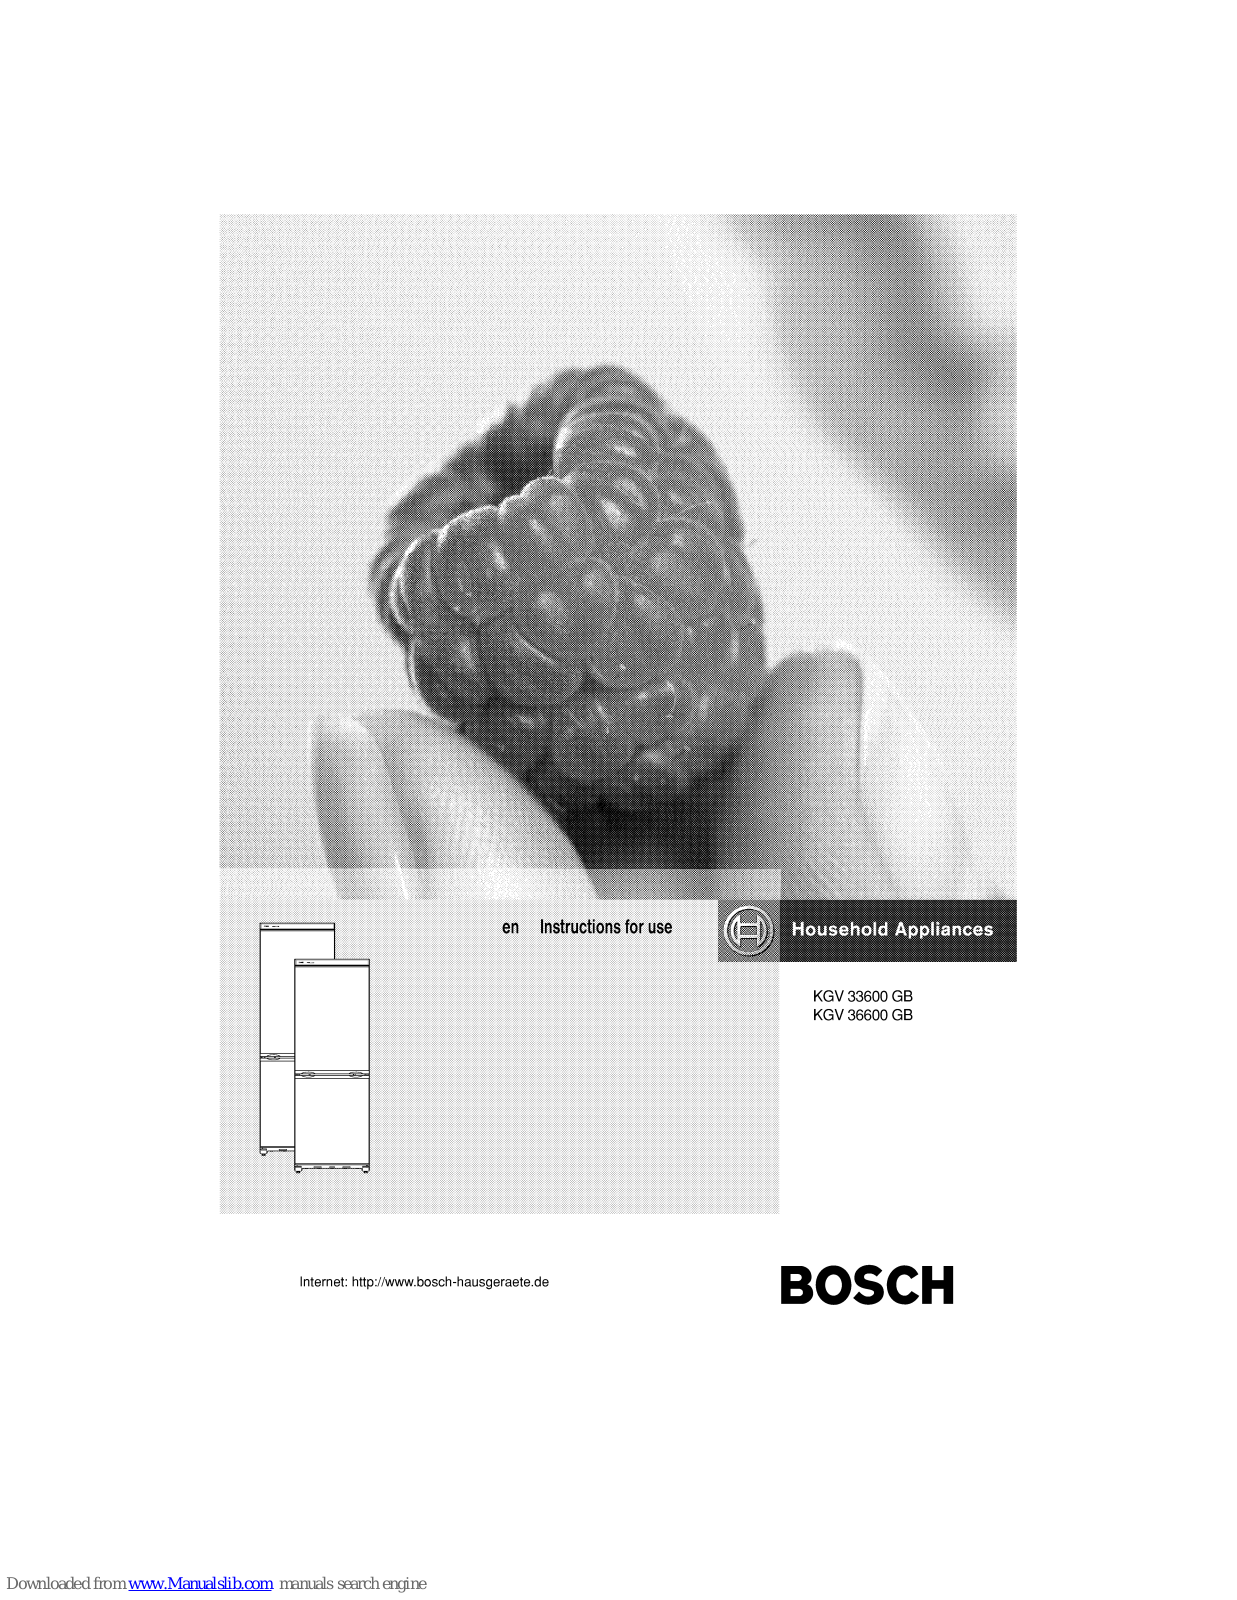 Bosch KGV 33600 GB, KGV 36600 GB Instructions For Use Manual